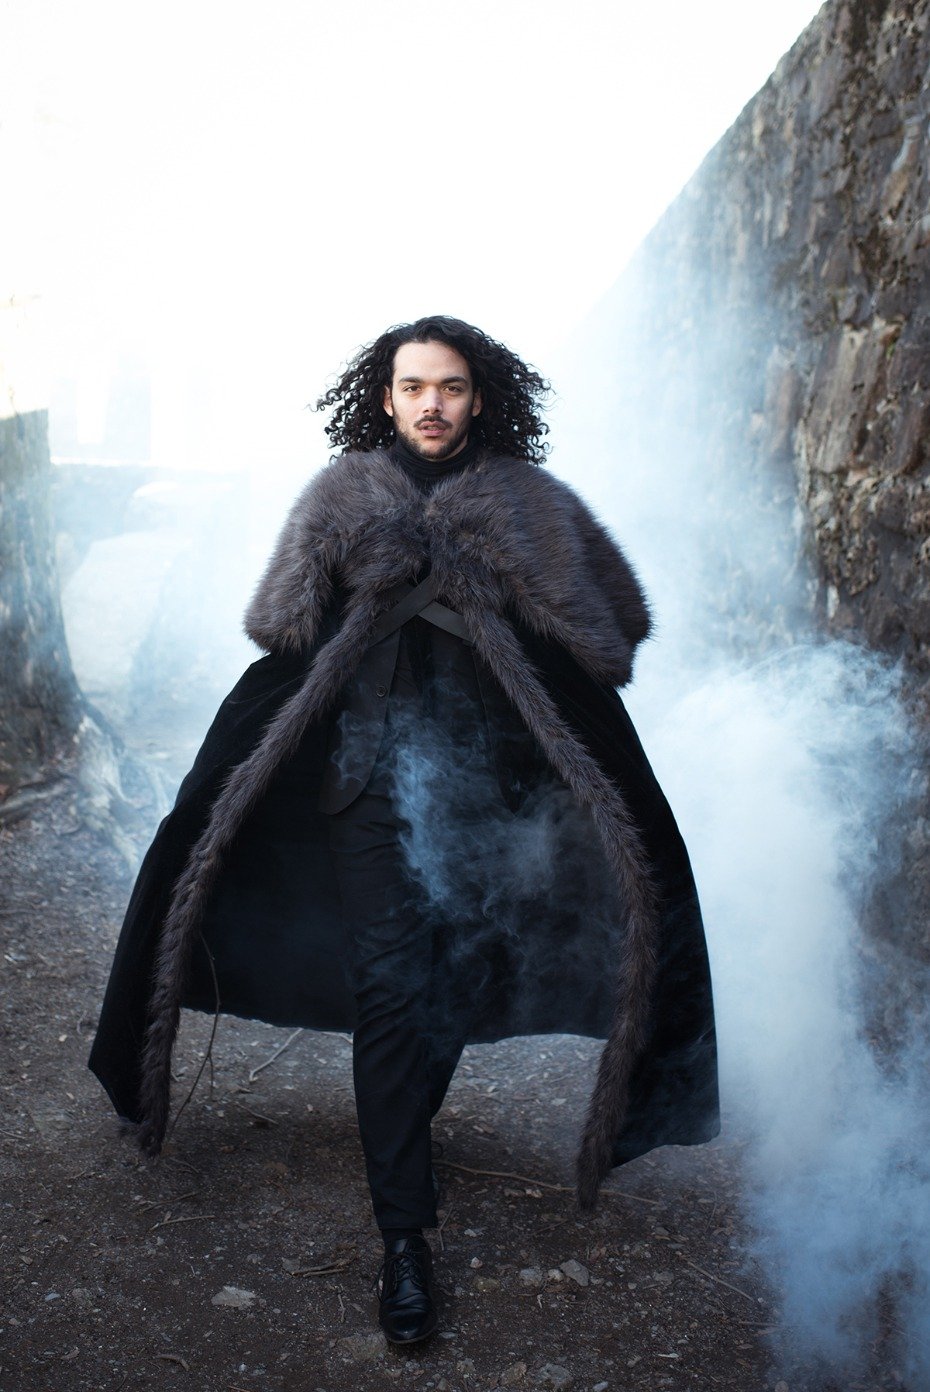 dramatic Jon Snow styled groom portrait